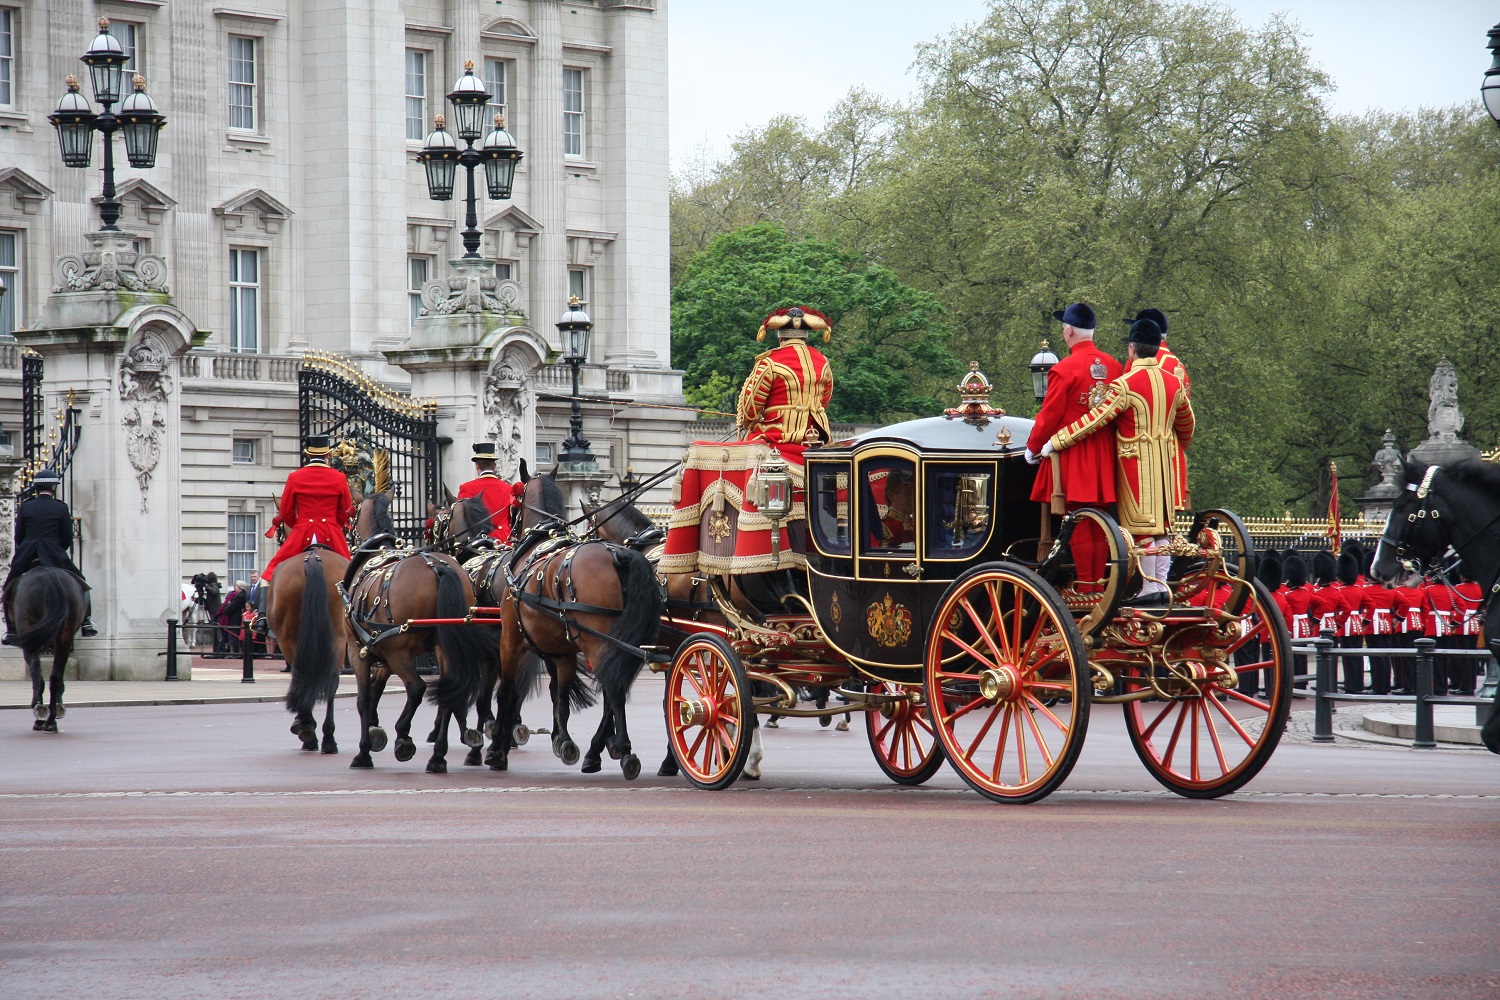 Buckingham Palace Westminster Walk, London